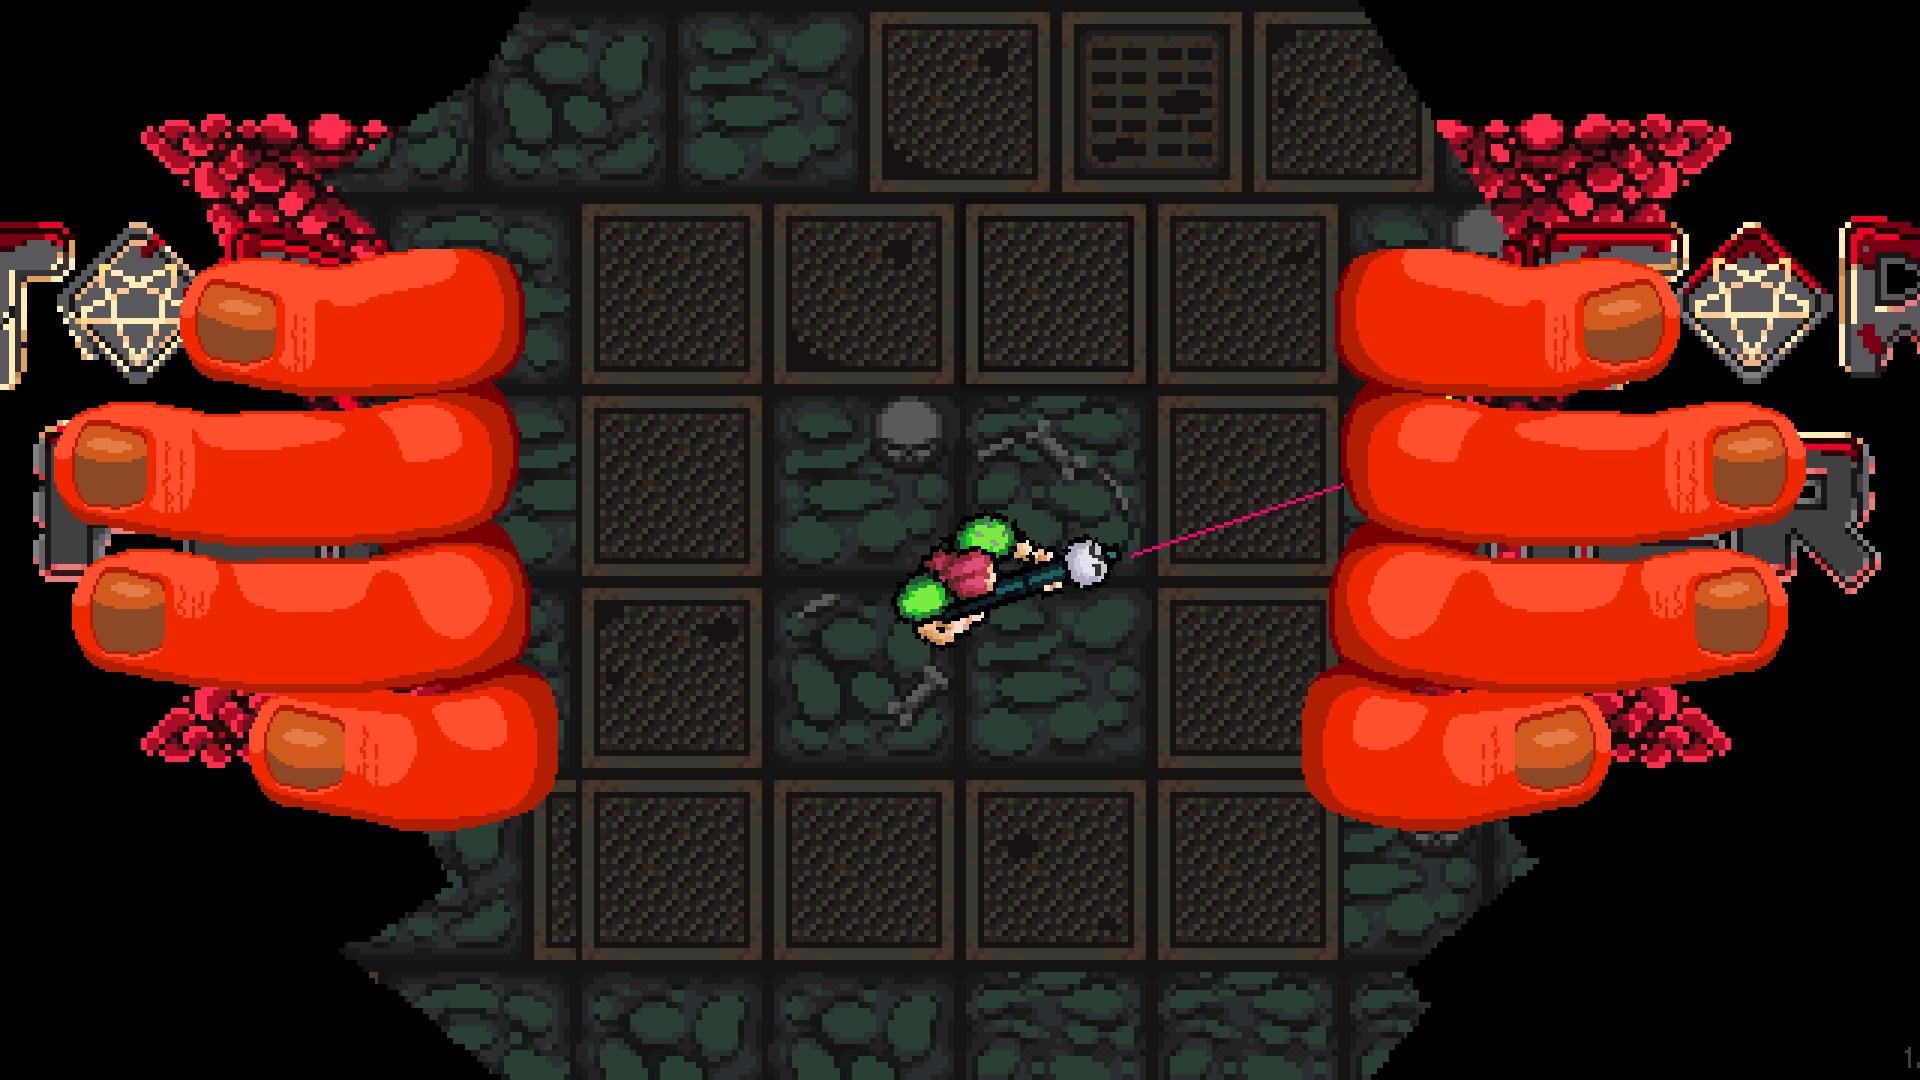 Screenshot №7 from game Tormentor❌Punisher